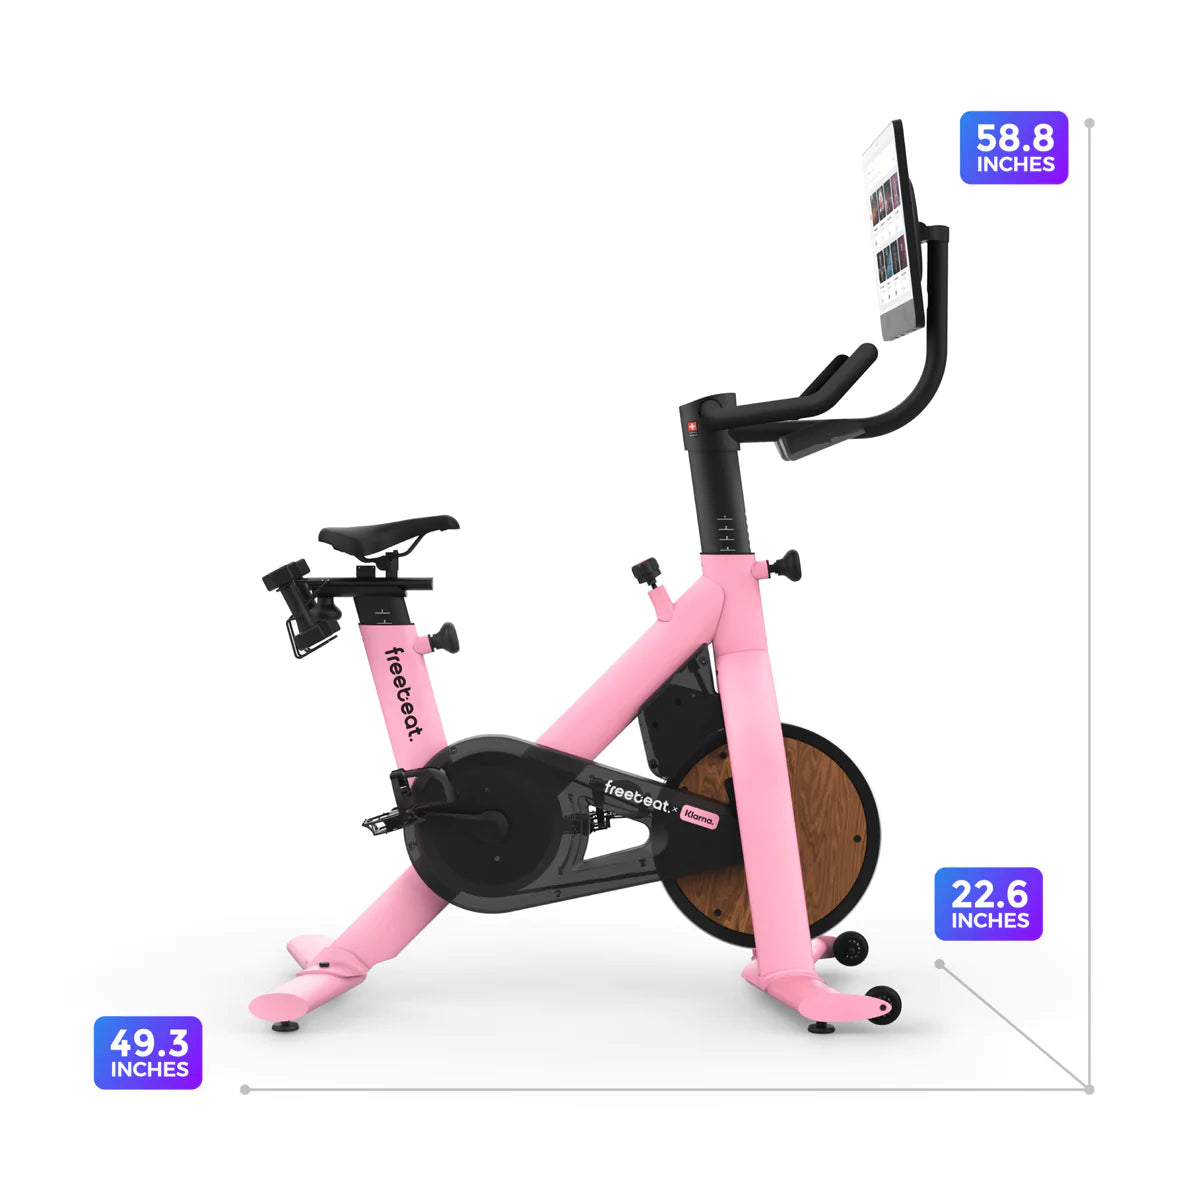 freebeat lit bike dimensions, pink exercise bike size